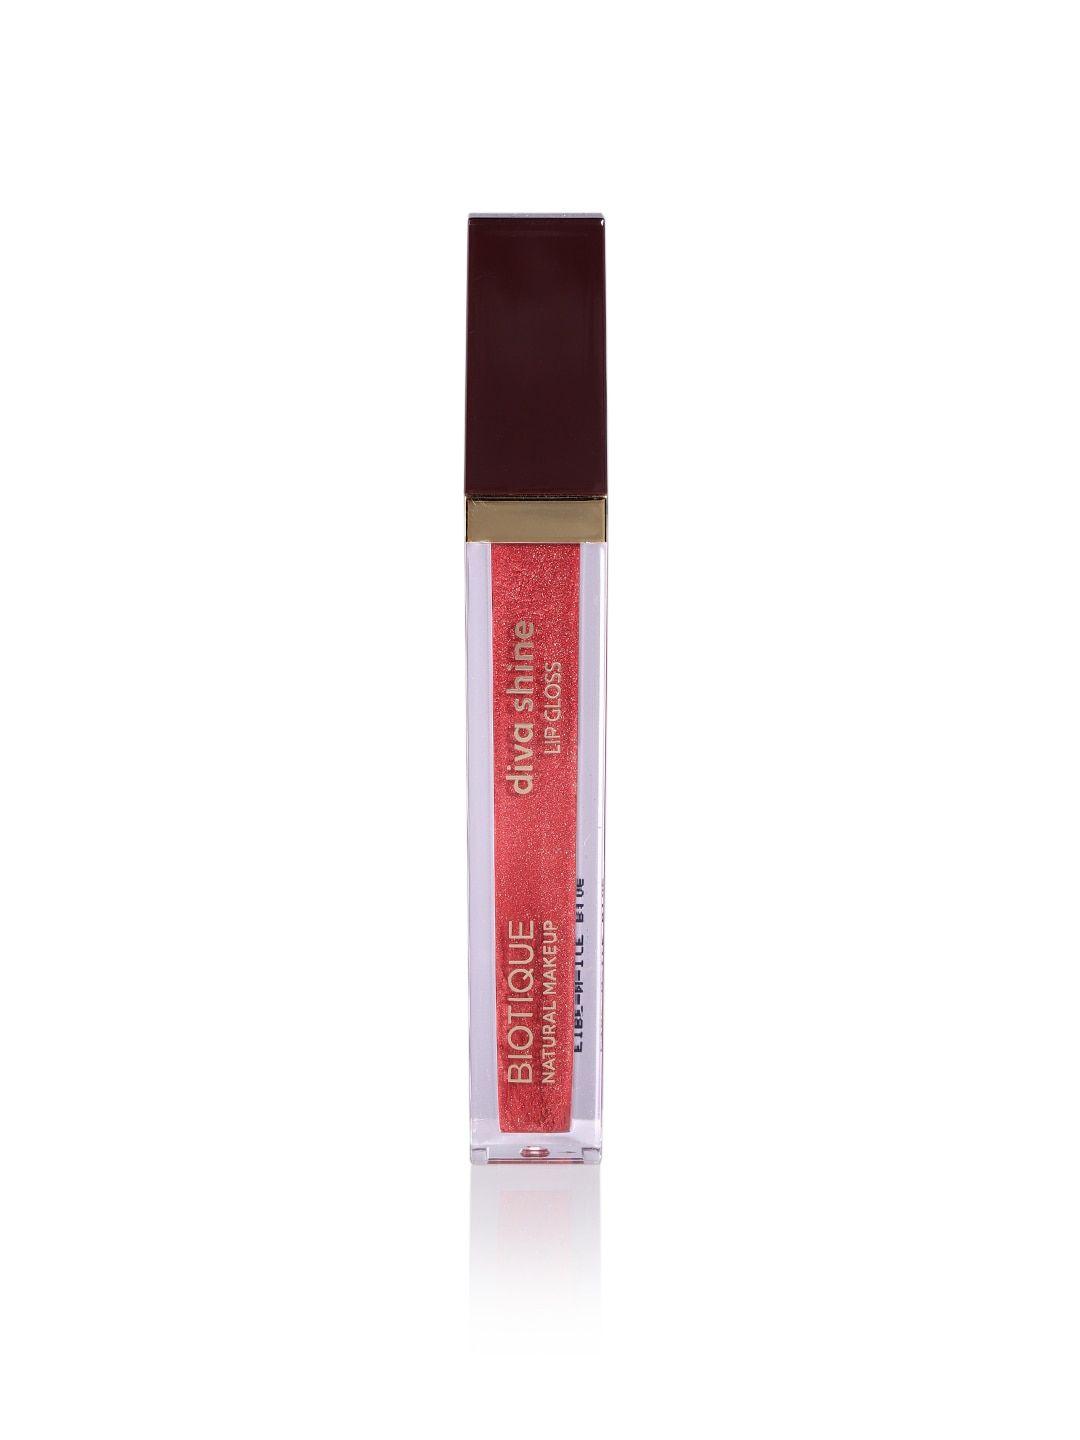 biotique natural makeup diva shine lip gloss- fire-n-ice r106 3 ml